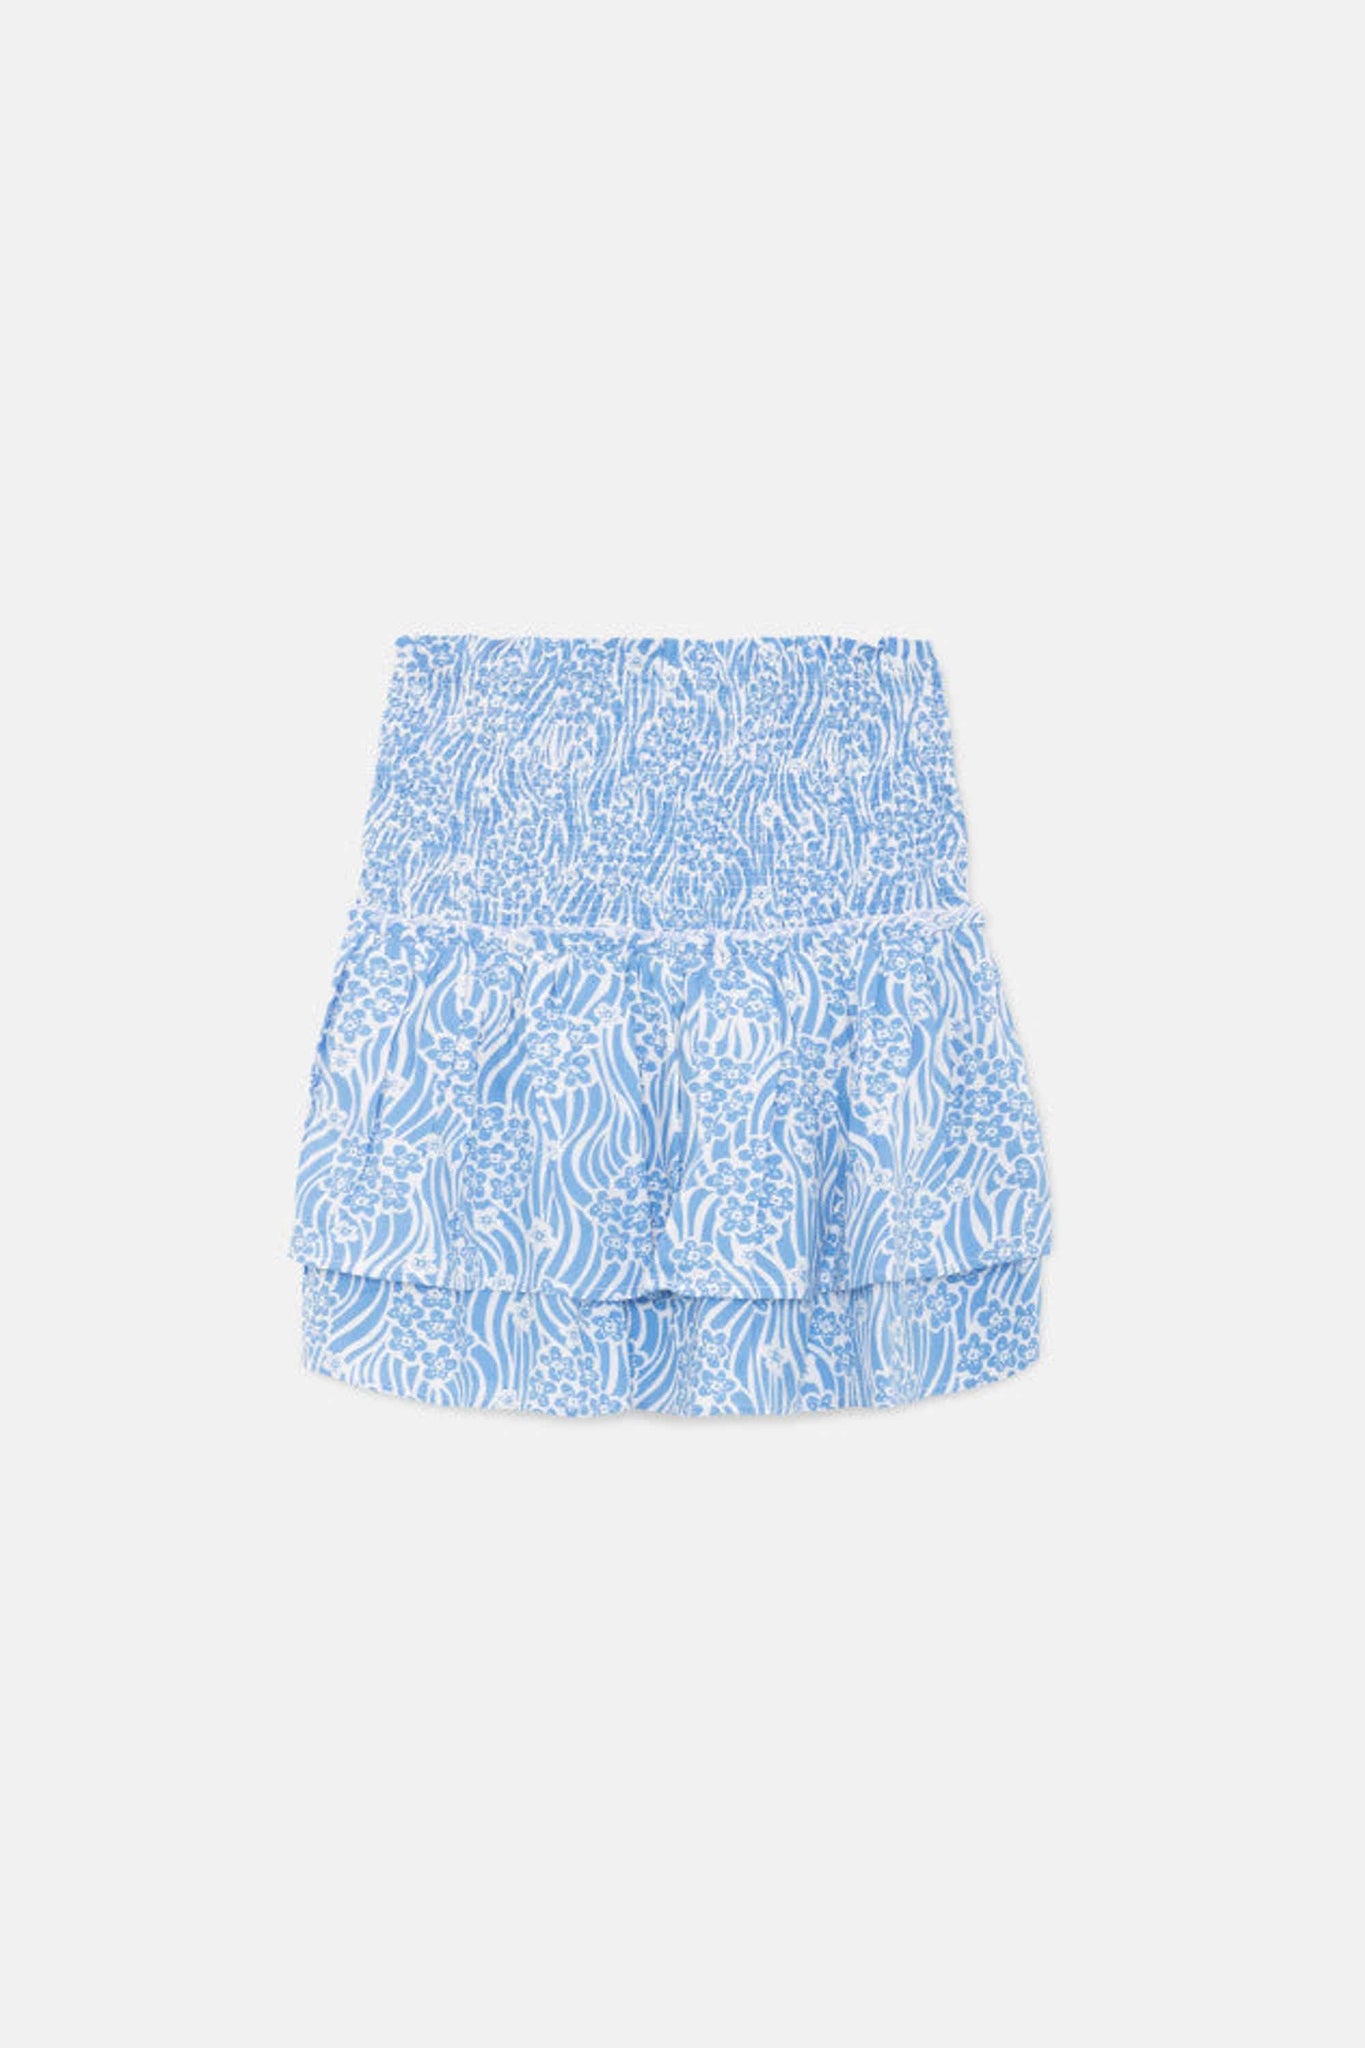 Compania Fantastica floral skirt in Mykonos Blue - clever alice